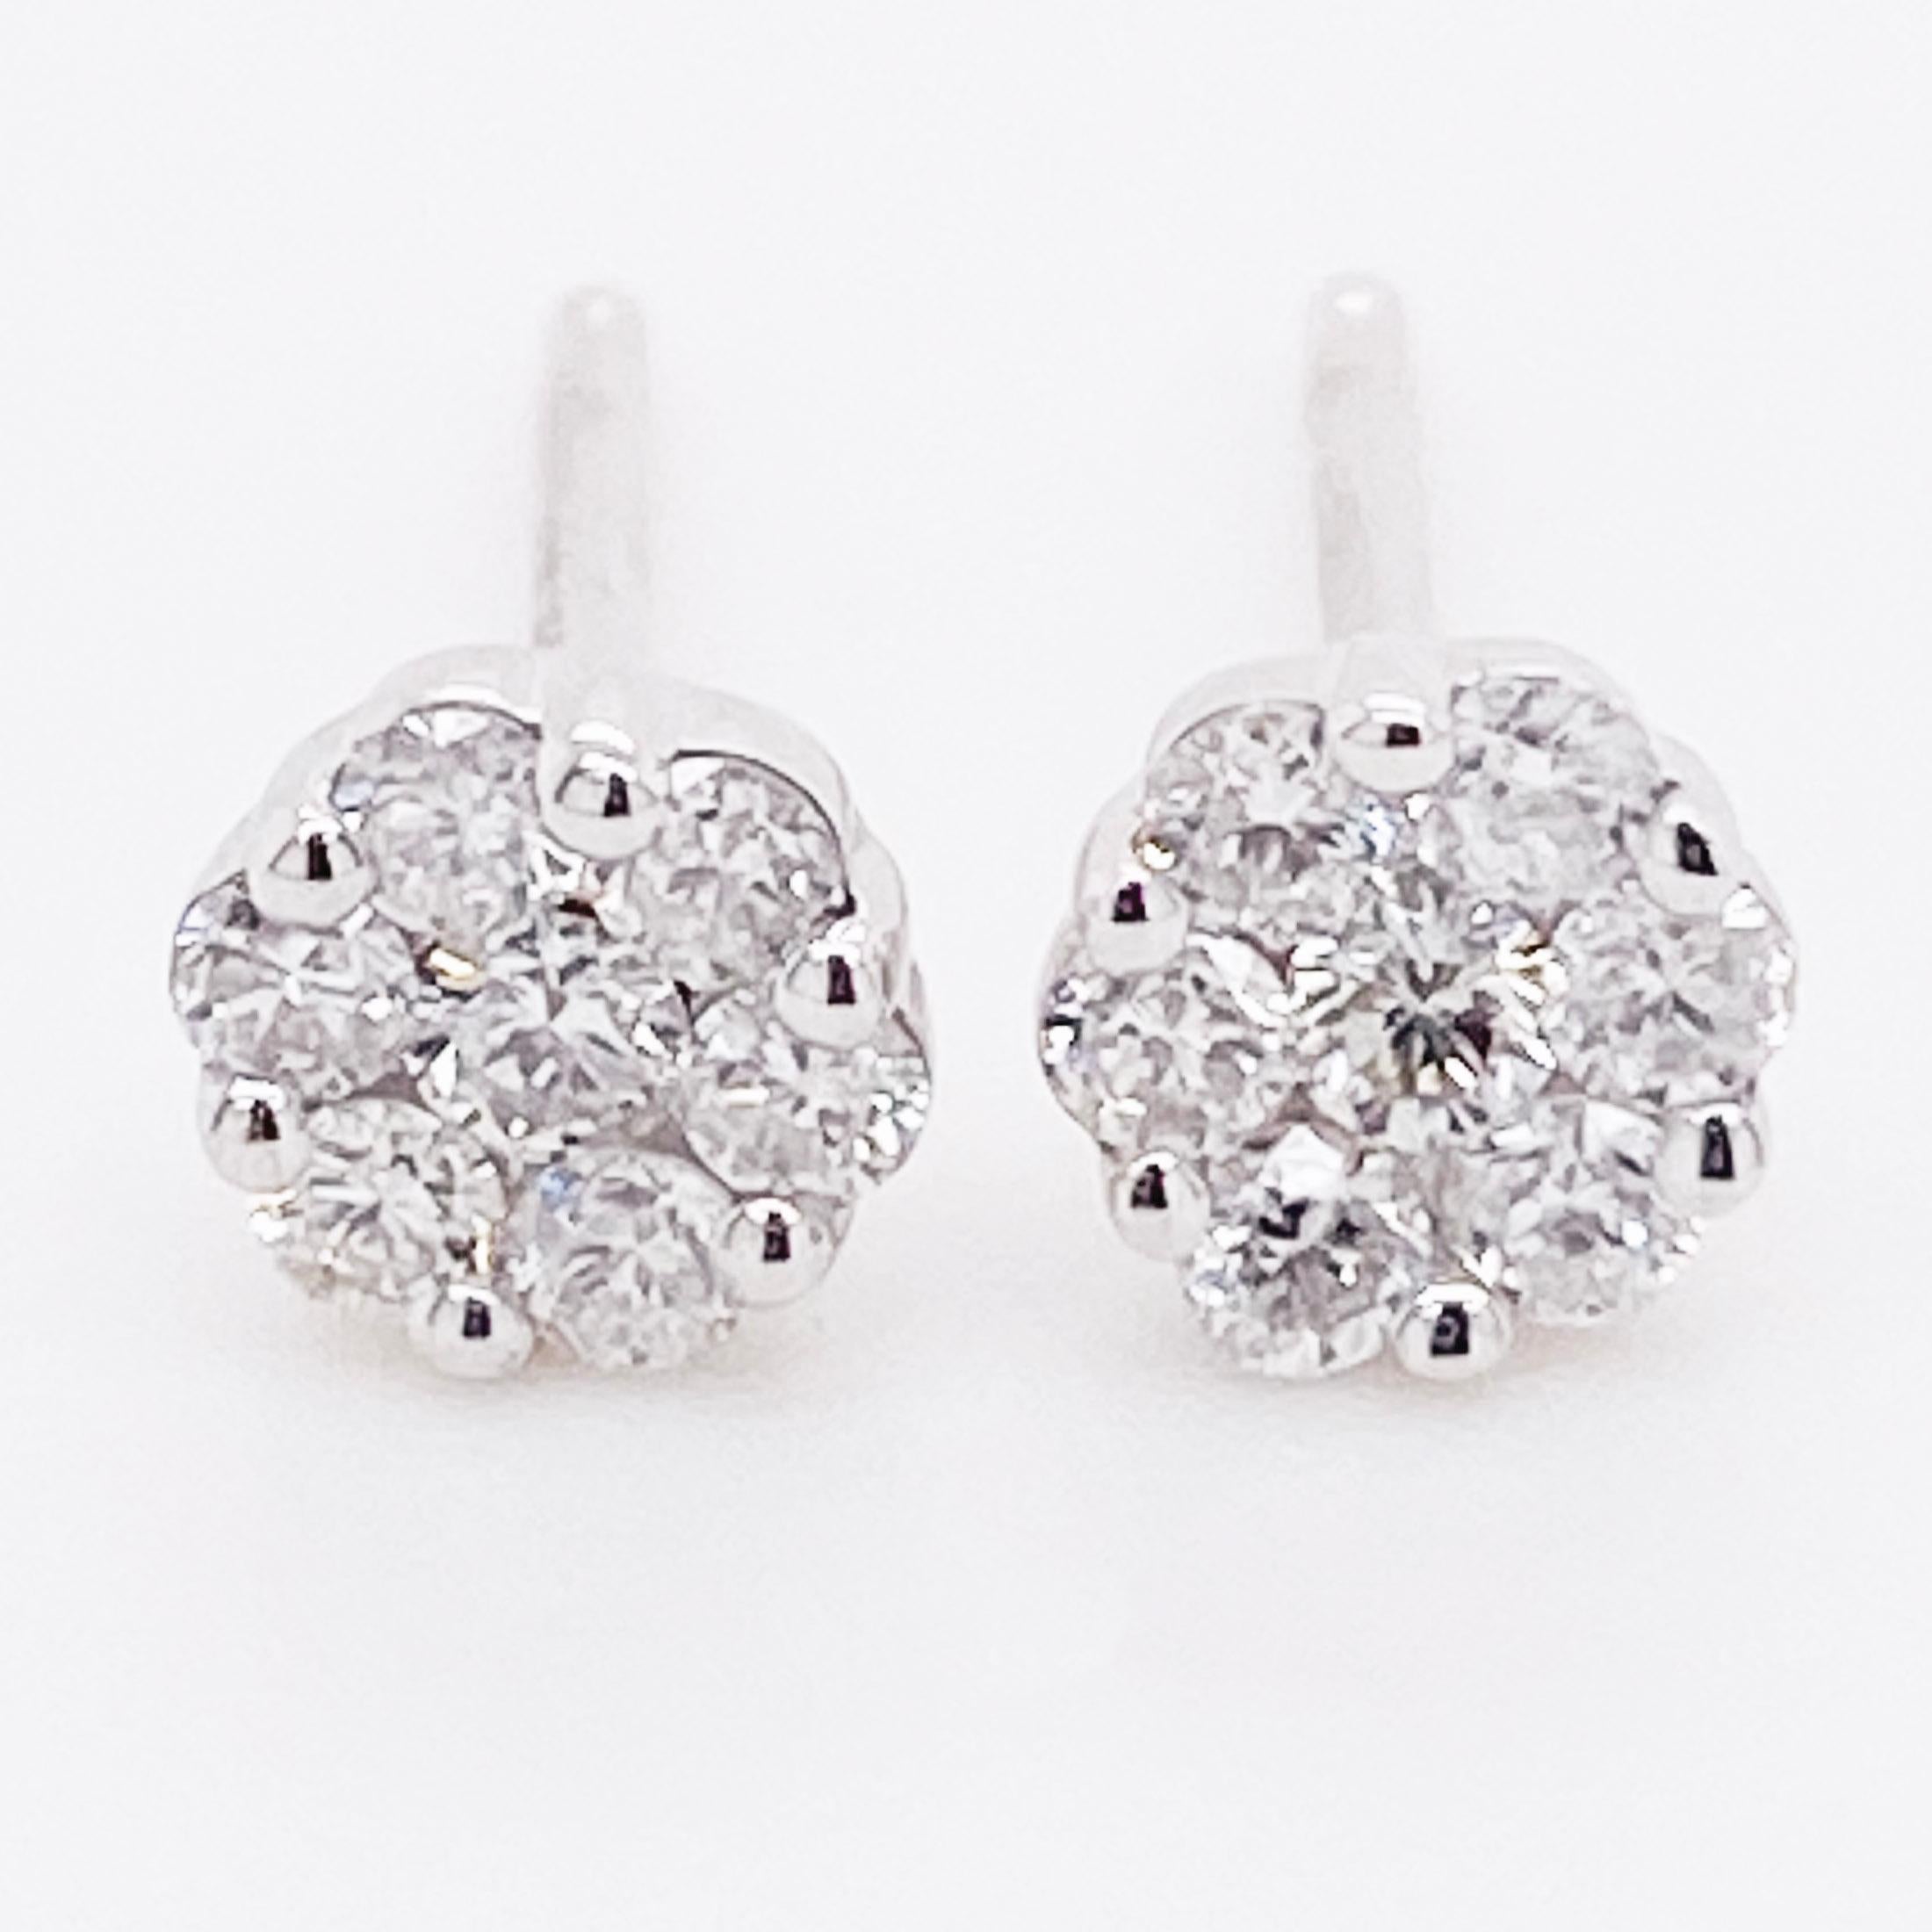 Modern Diamond Cluster Earrings, White Gold Diamond Stud Earrings, Dainty Earrings For Sale